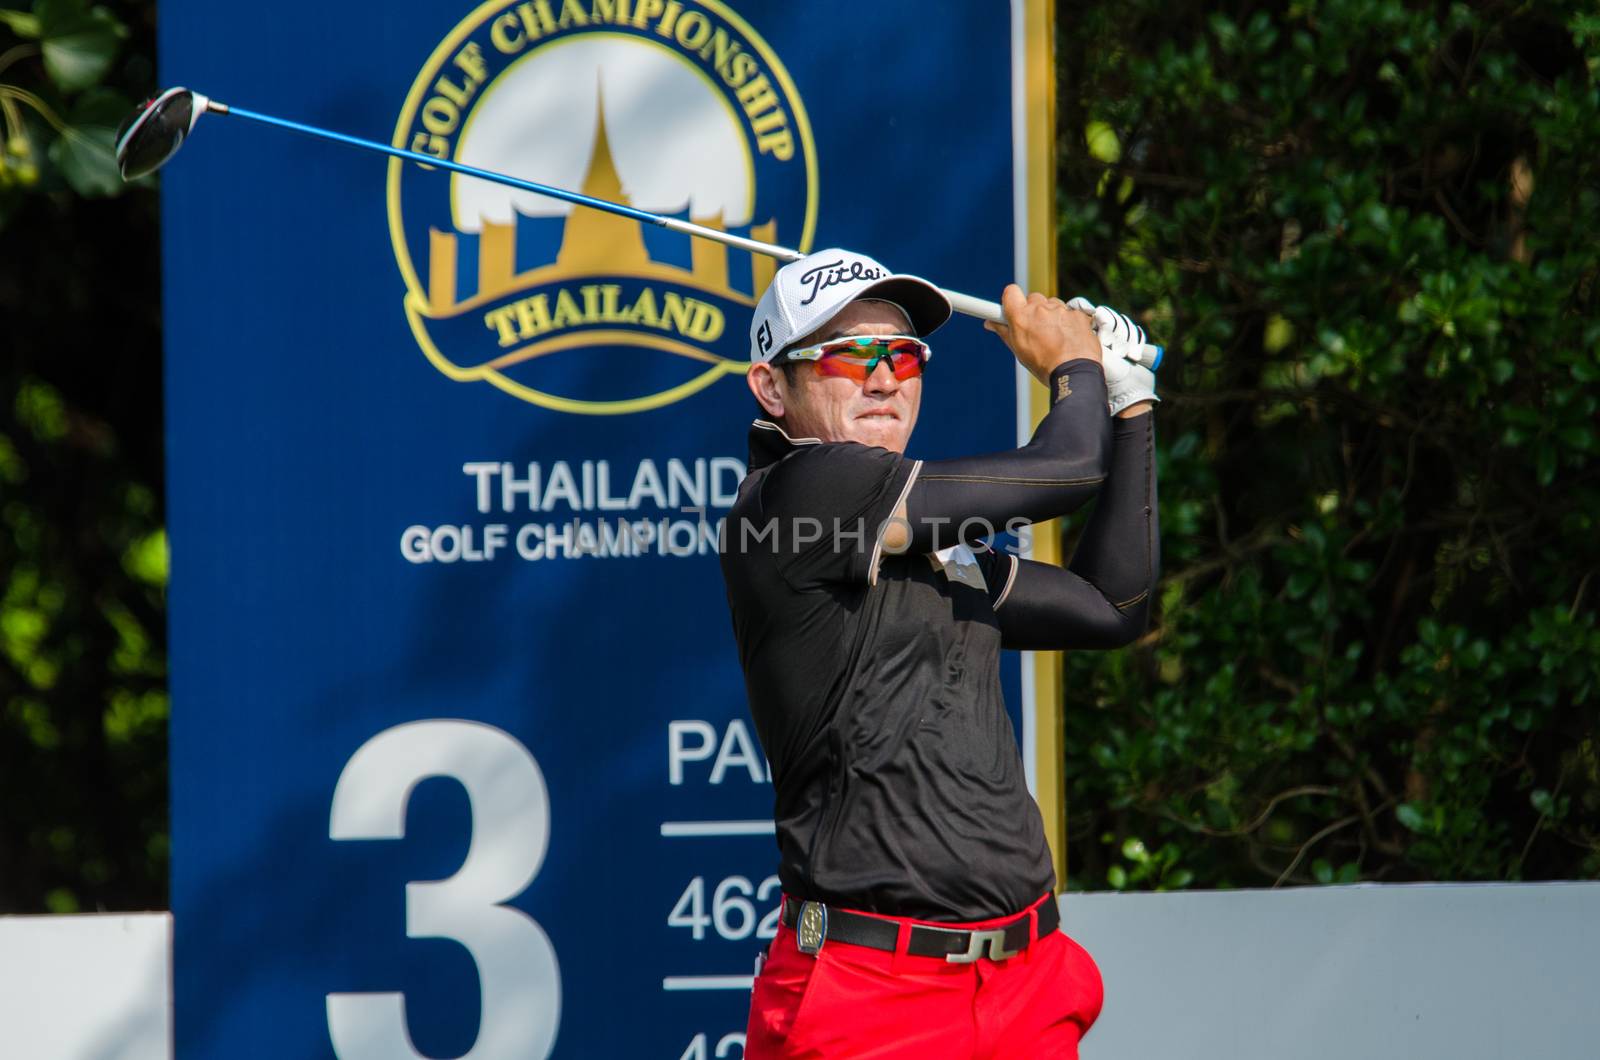 CHONBURI - DECEMBER 13 : Sattaya Supupramai of Thailand player in Thailand Golf Championship 2015 at Amata Spring Country Club on December 13, 2015 in Chonburi, Thailand.